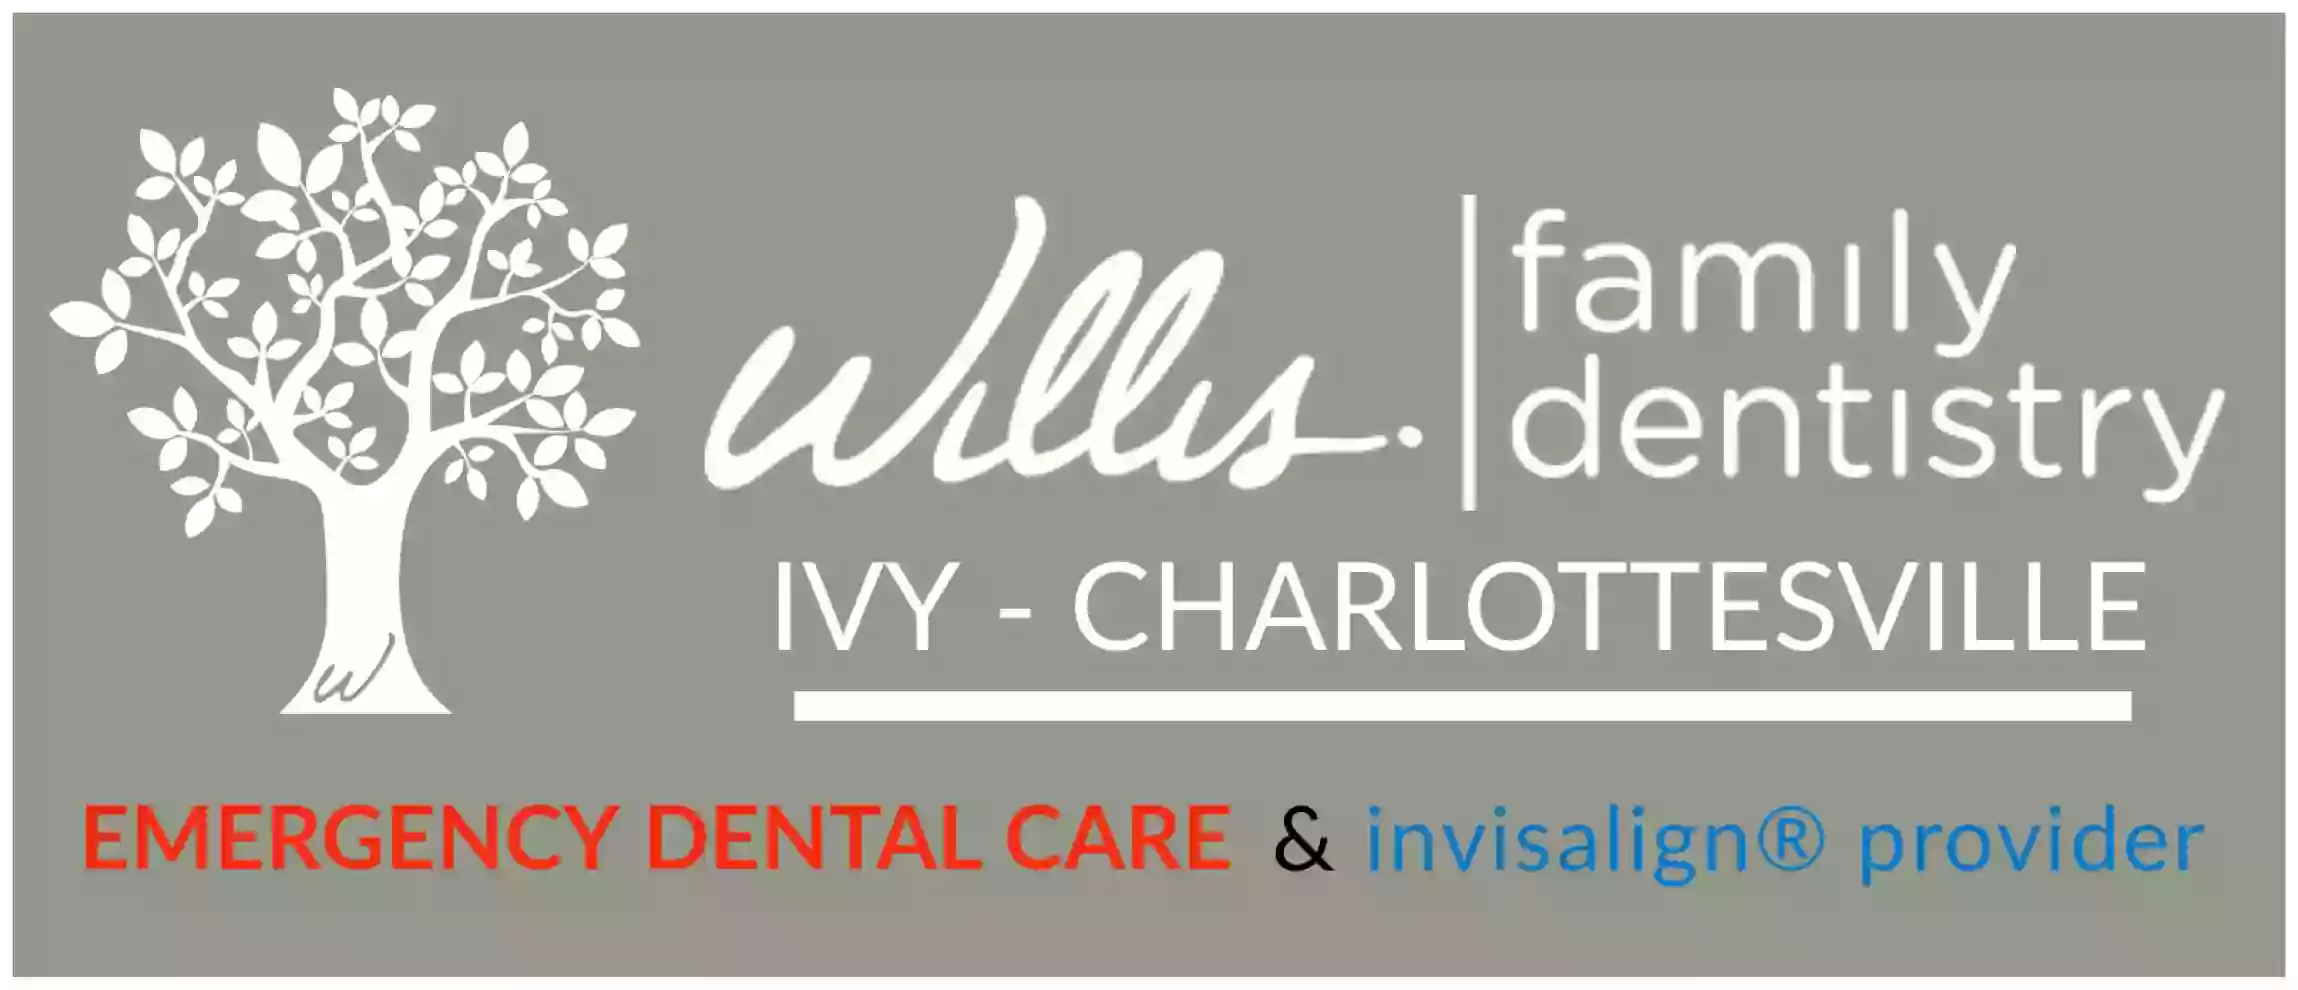 Willis & Associates Family Dentistry Ivy